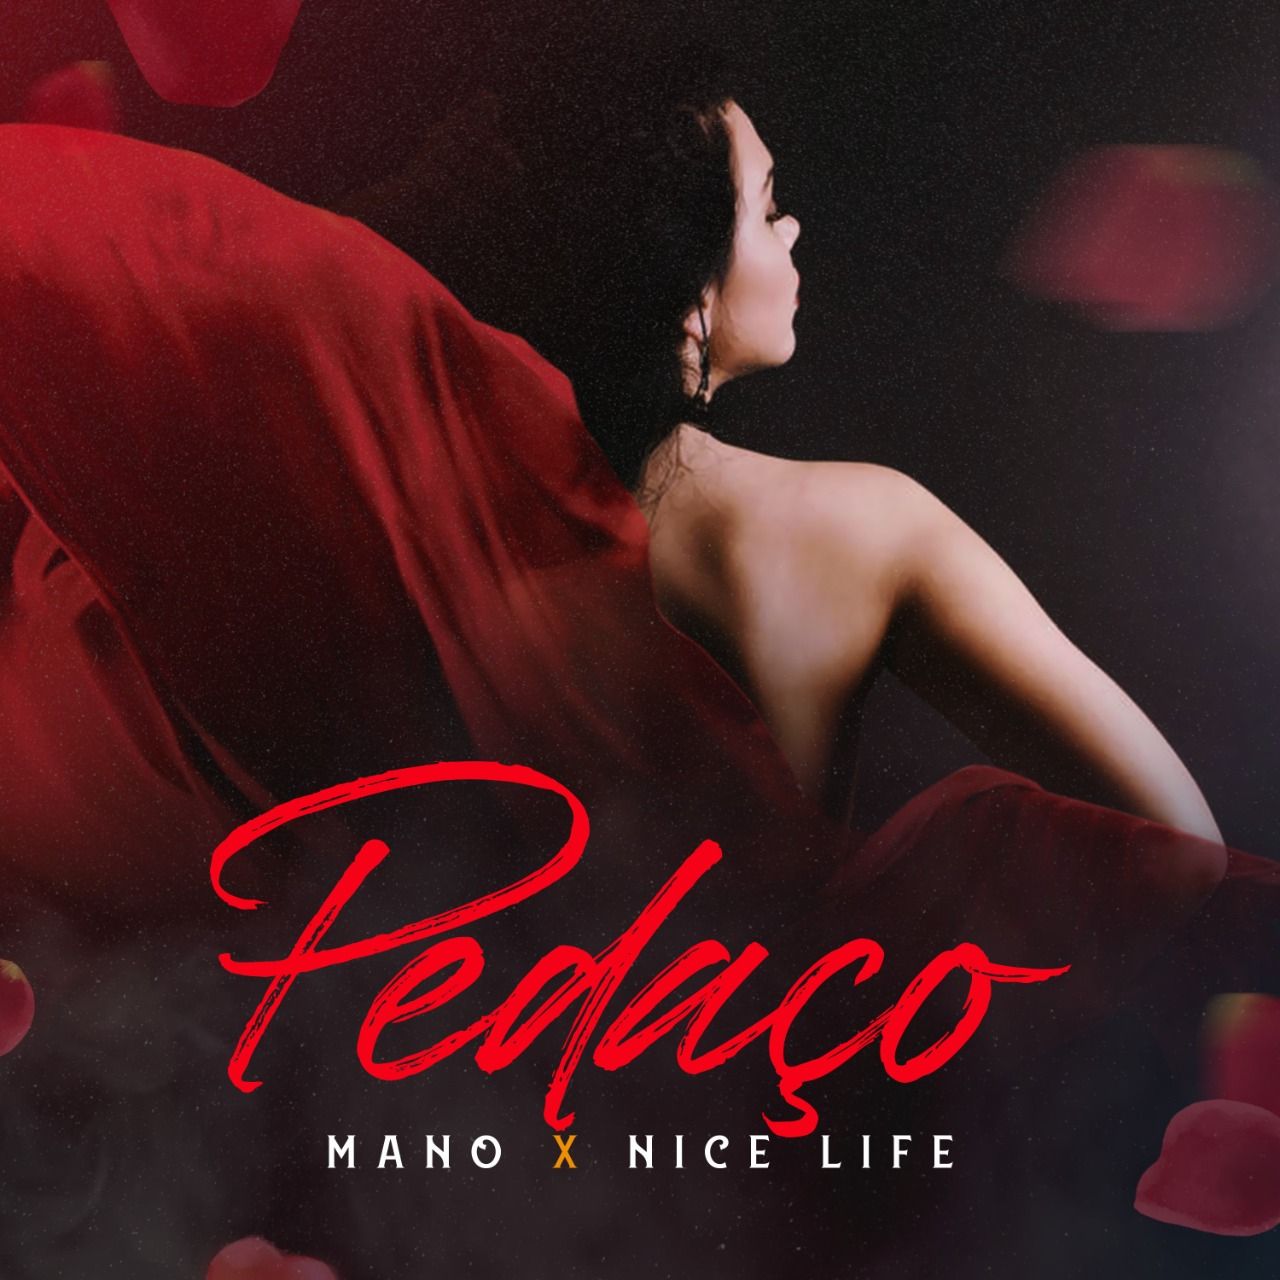 Download Mano X Nice Life - Pedaco